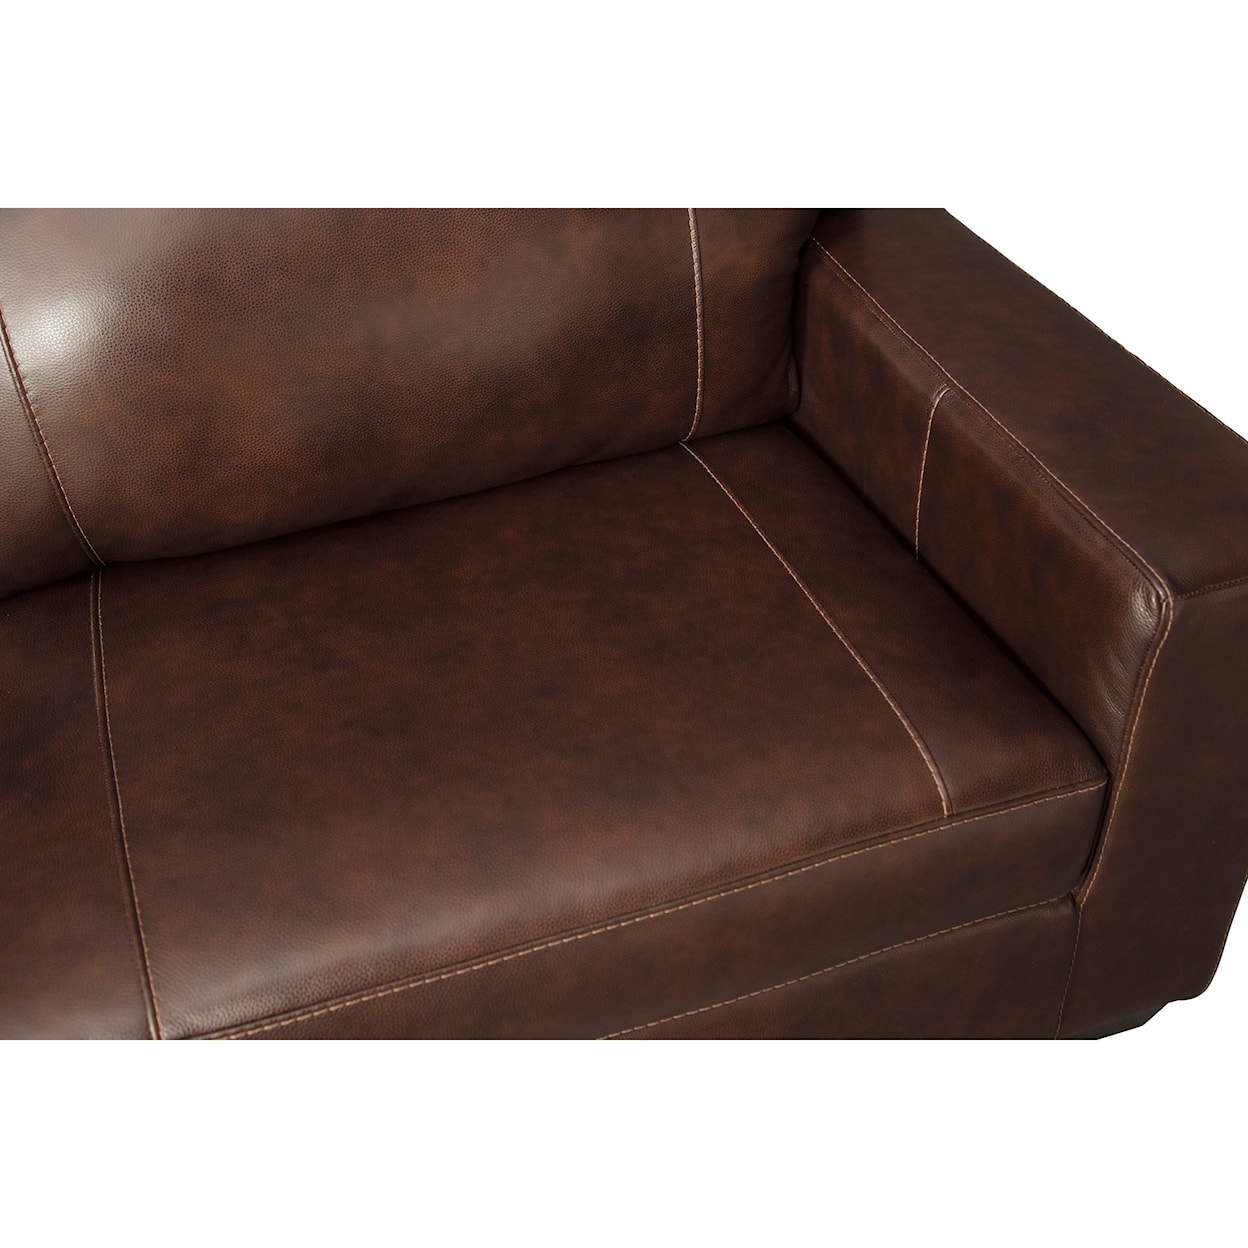 Ashley Furniture Signature Design Morelos Sofa